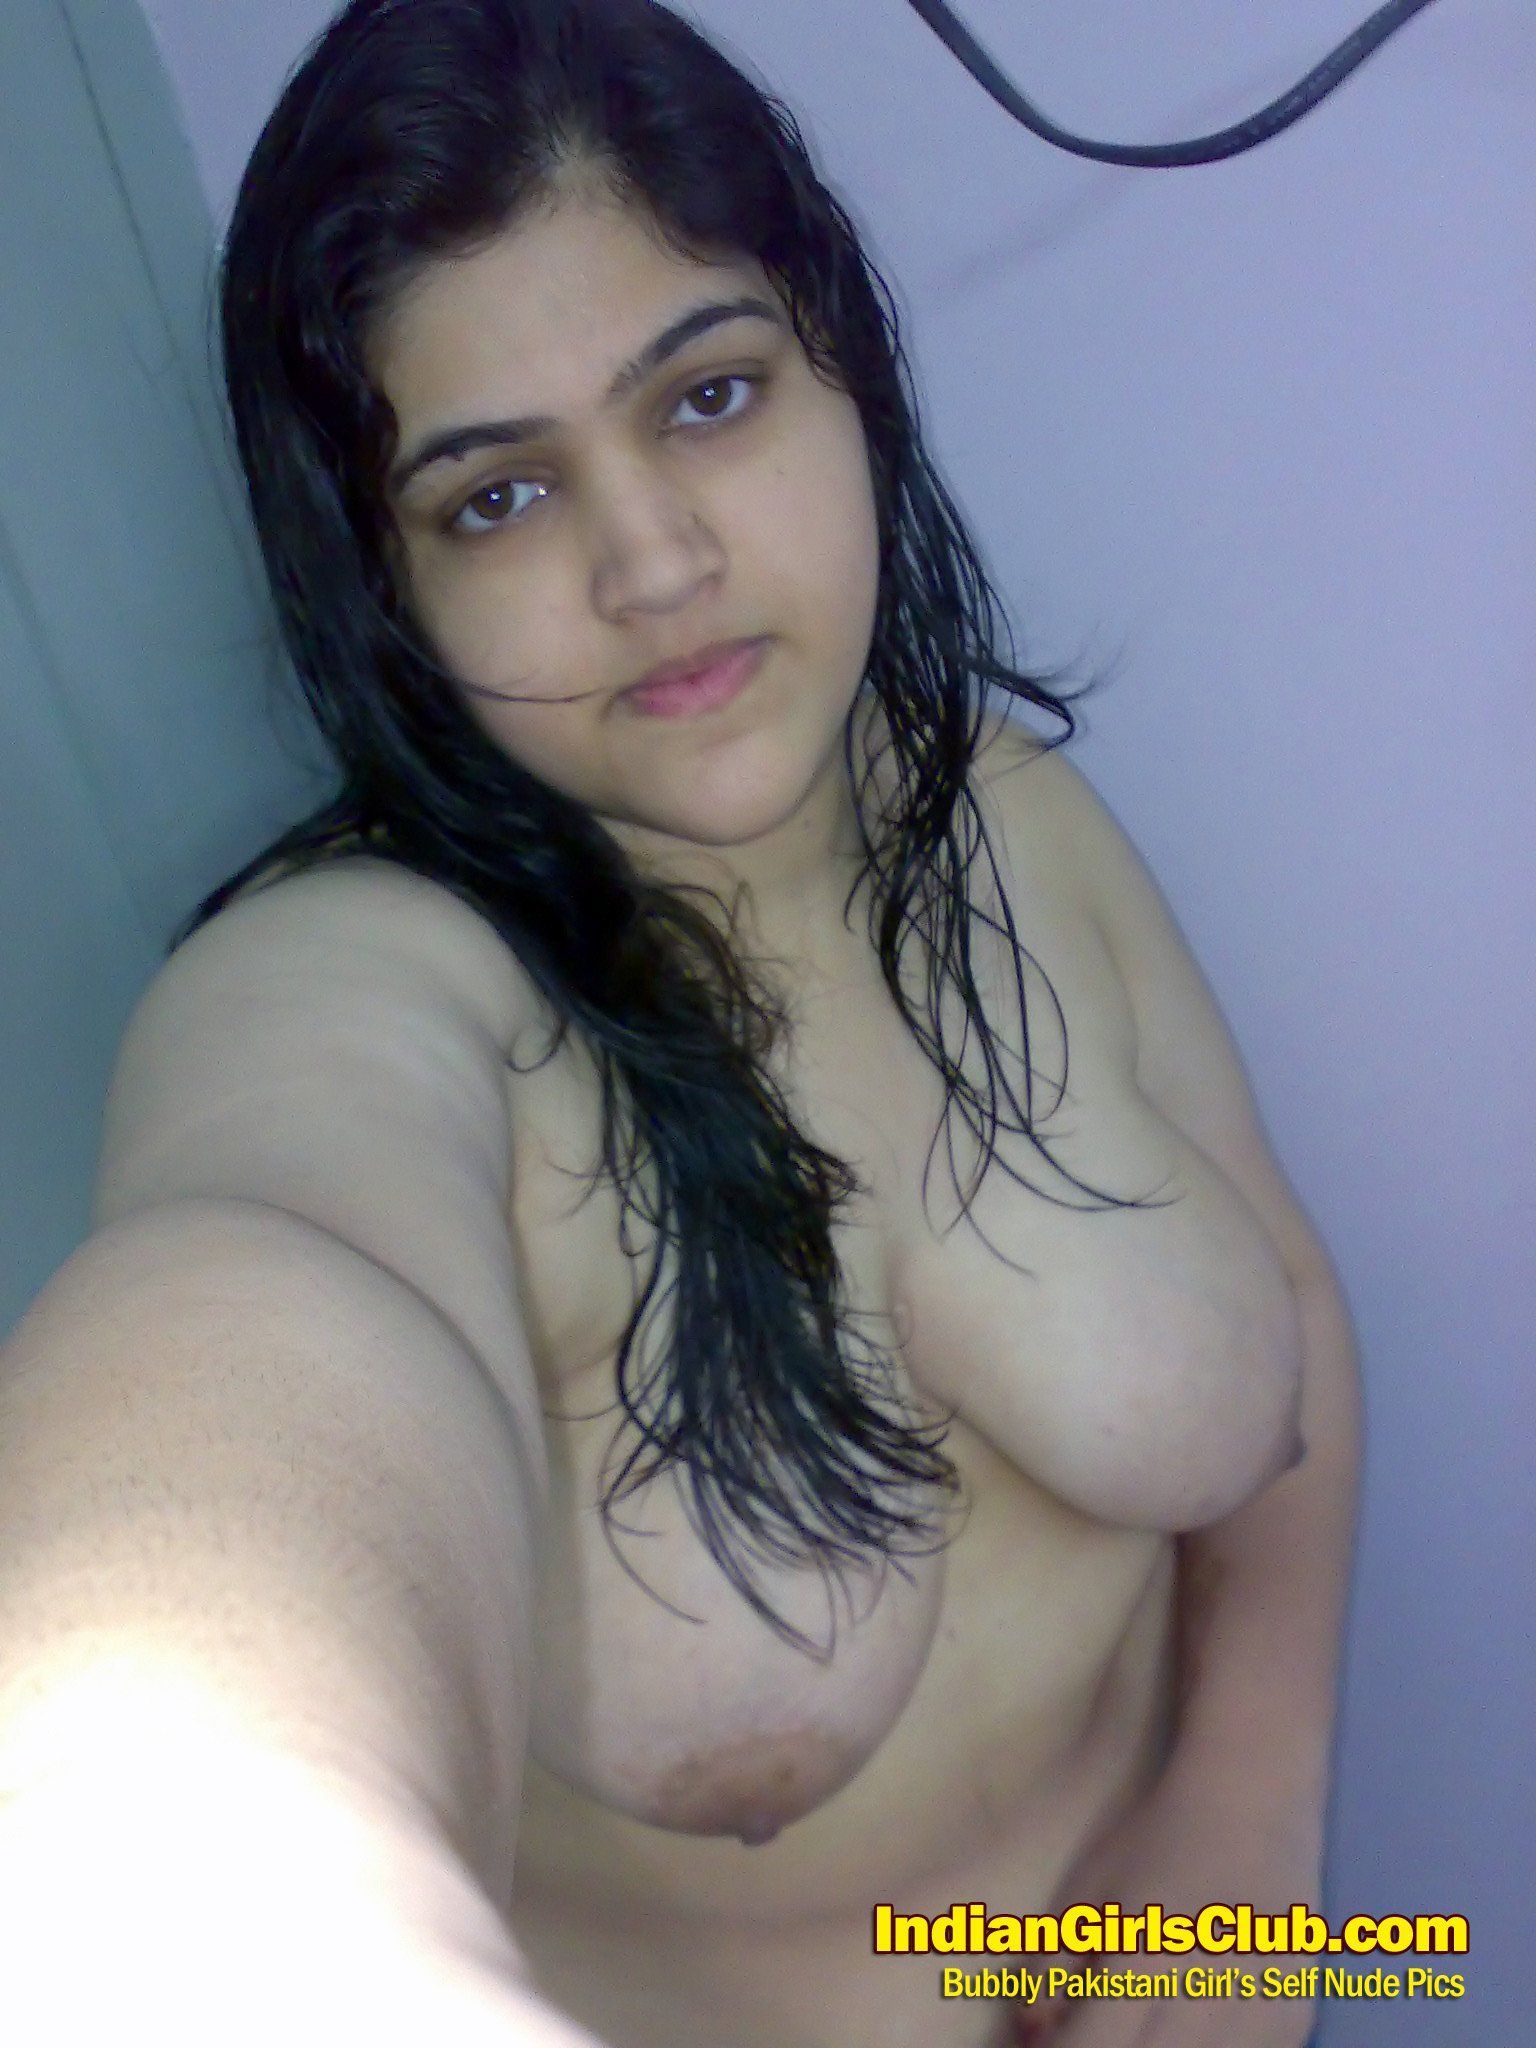 Pakistani girl with boys nude pic